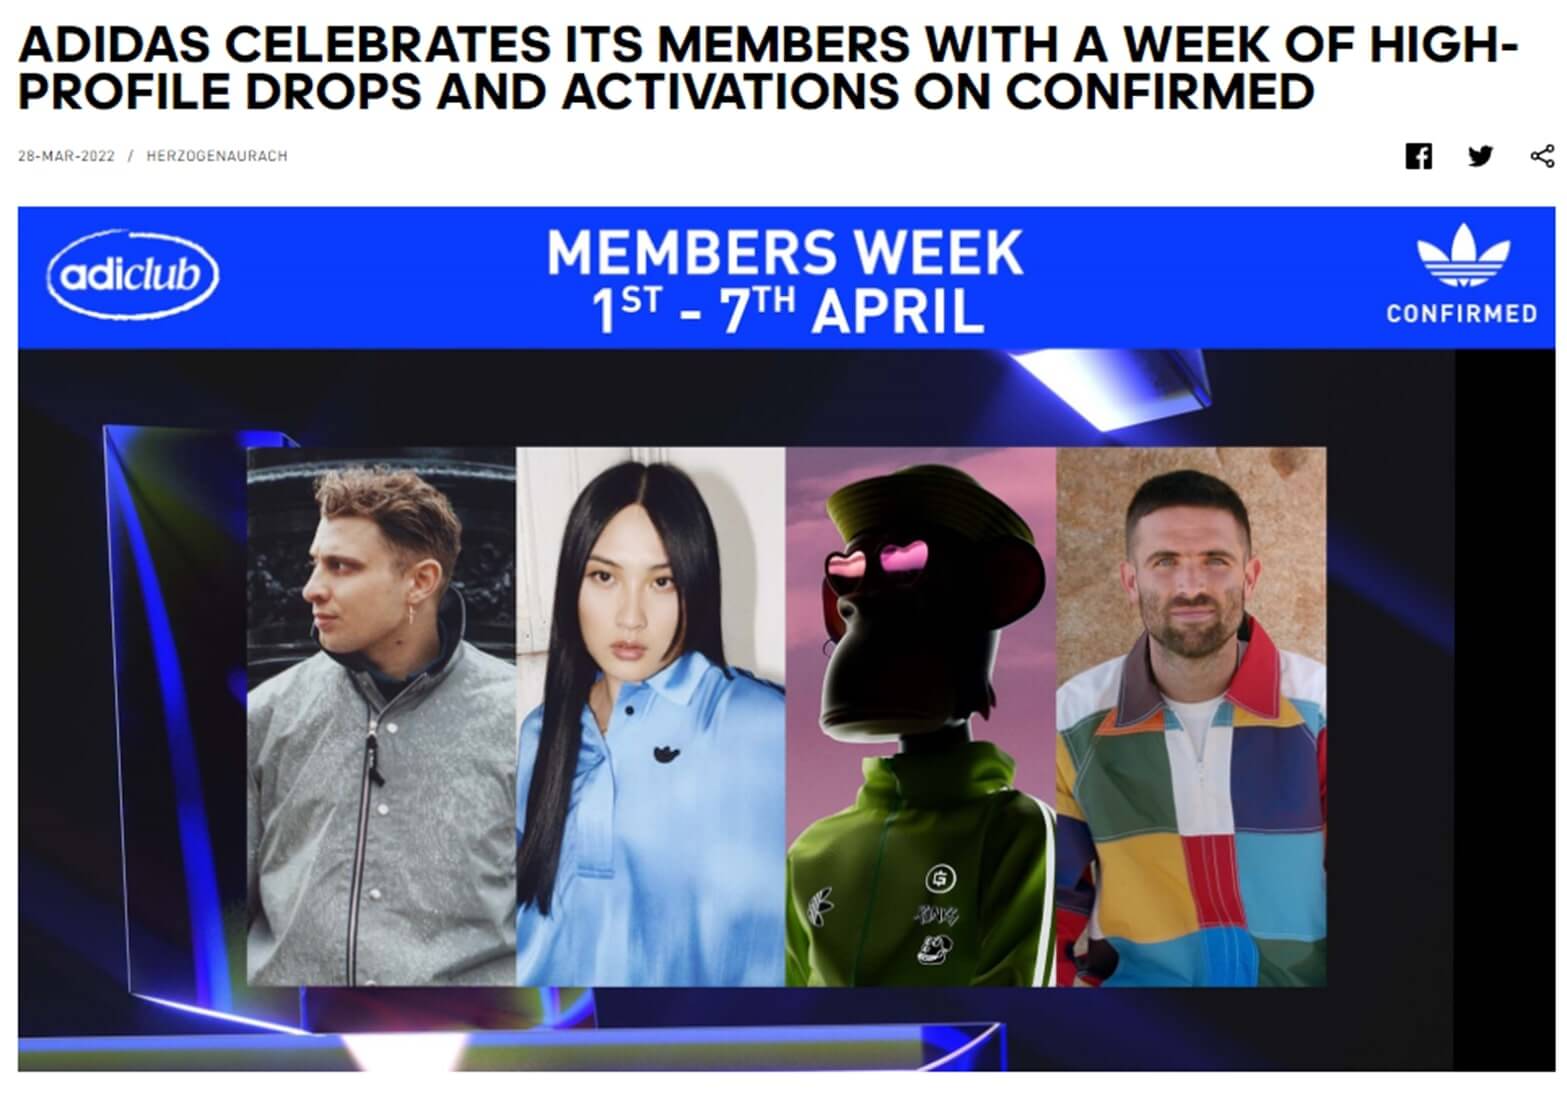 Adidas members week announcement: a week of high profile drops